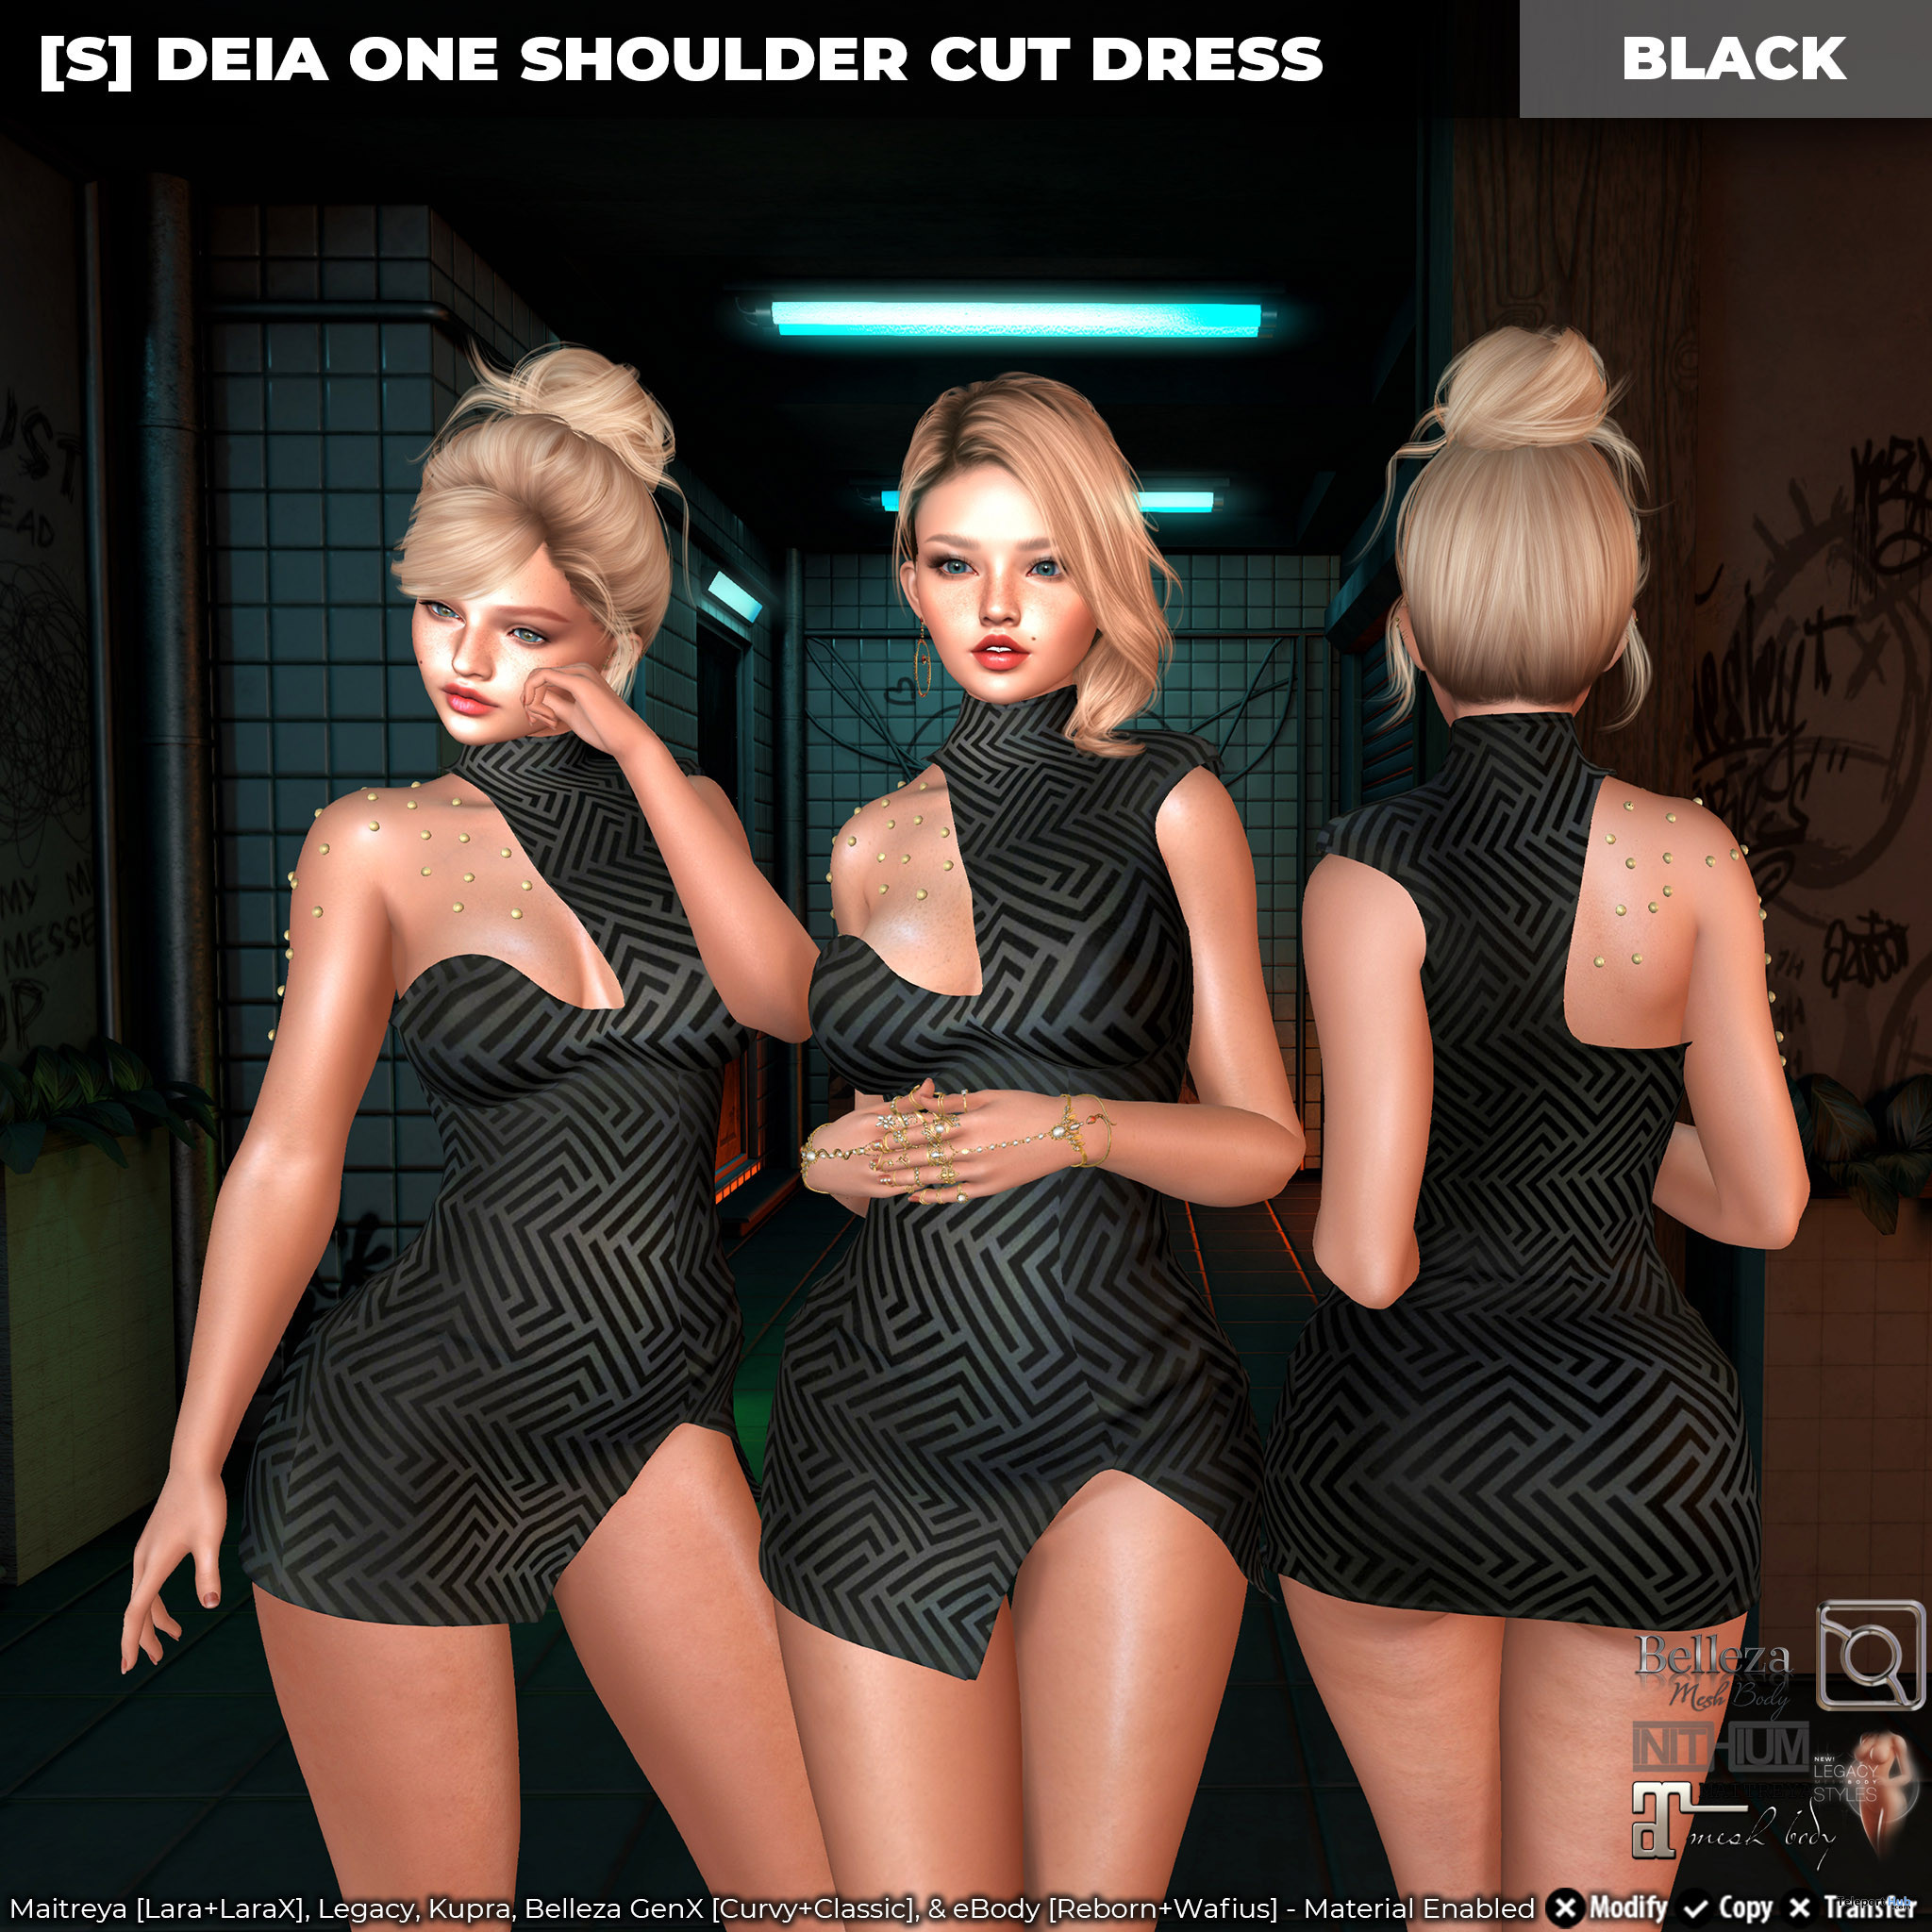 New Release: [S] Deia One Shoulder Cut Dress by [satus Inc] - Teleport Hub - teleporthub.com